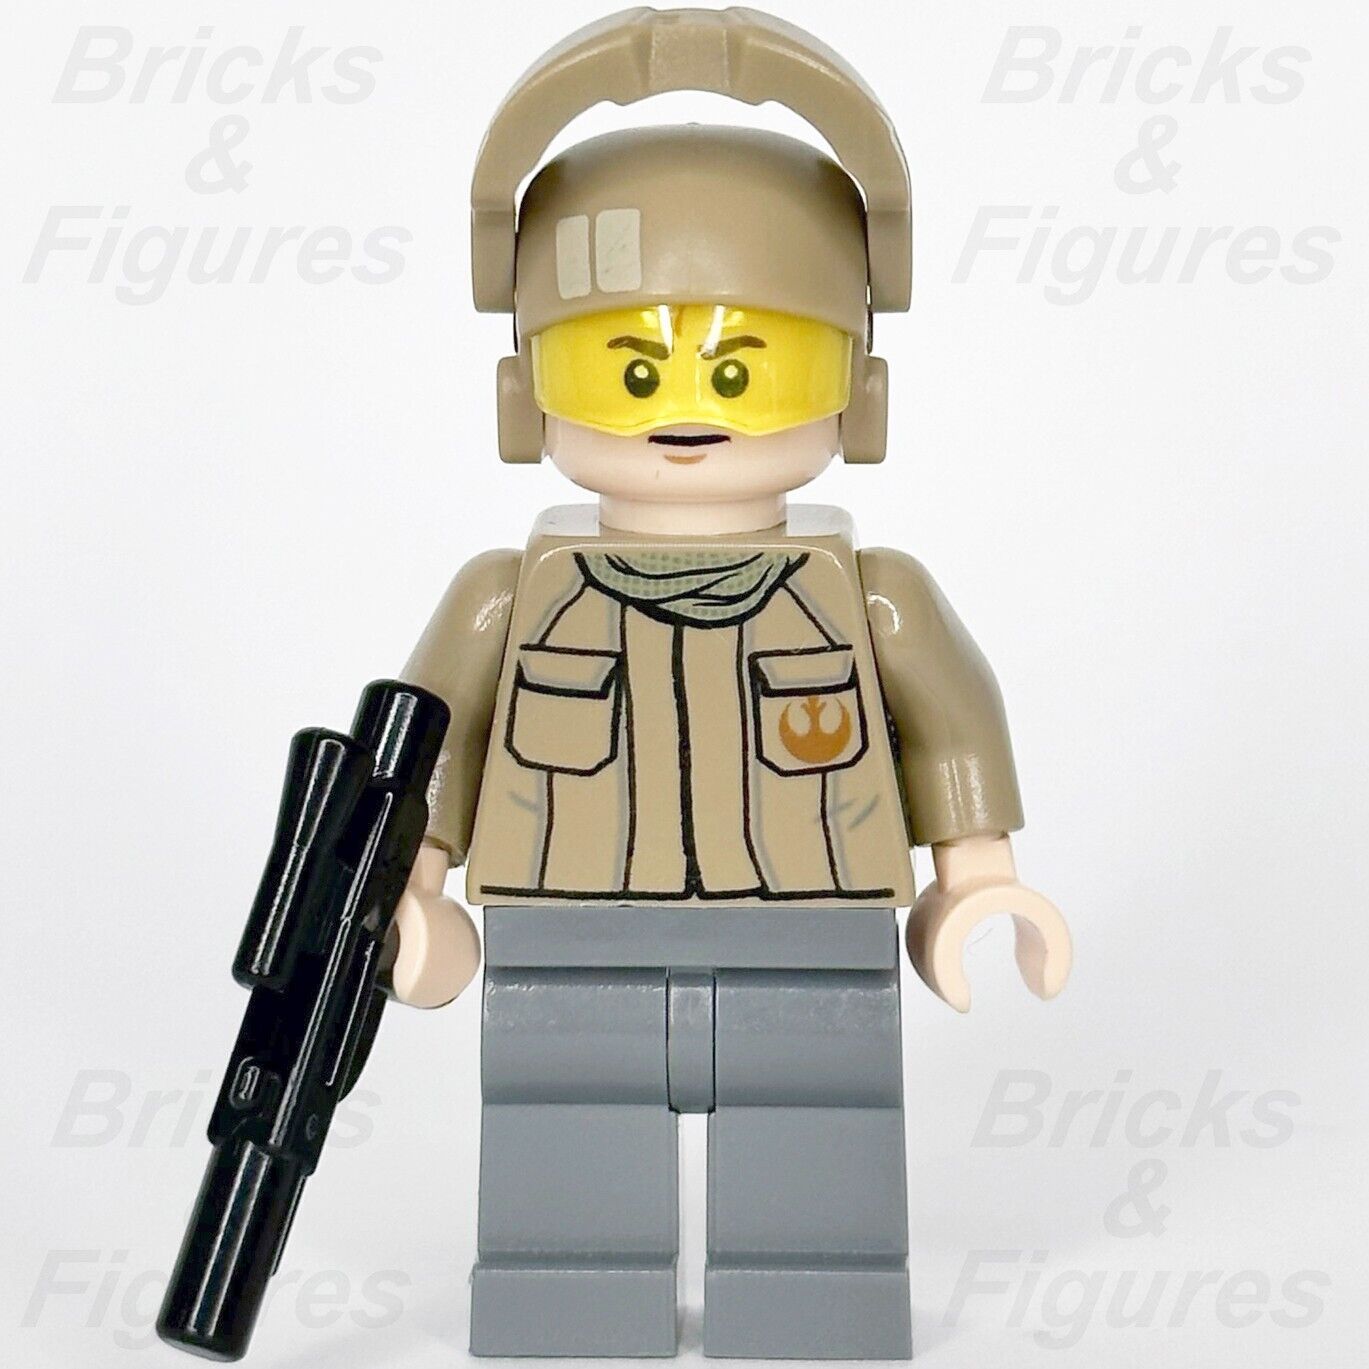 LEGO Star Wars Resistance Trooper Minifigure The Force Awakens 75140 sw0721 New - Bricks & Figures